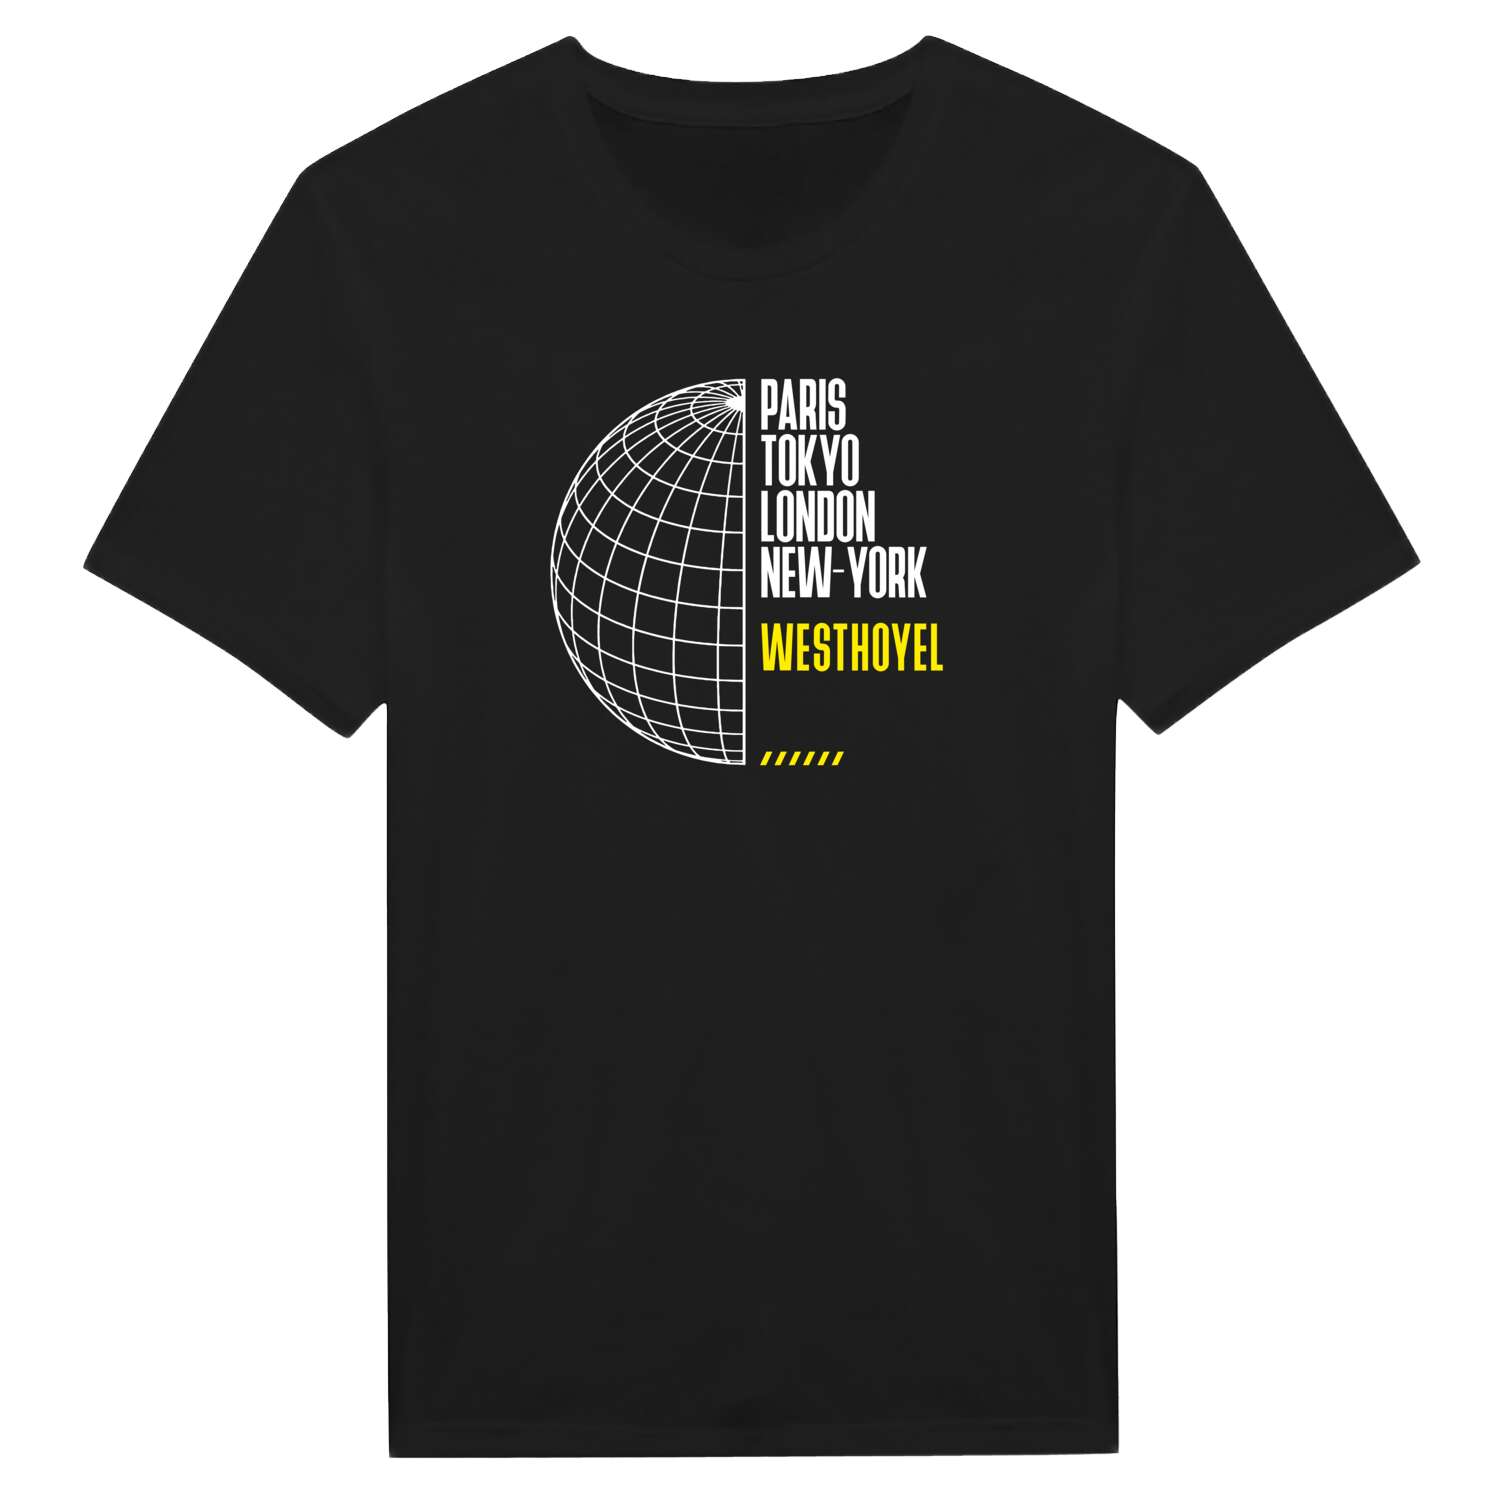 Westhoyel T-Shirt »Paris Tokyo London«